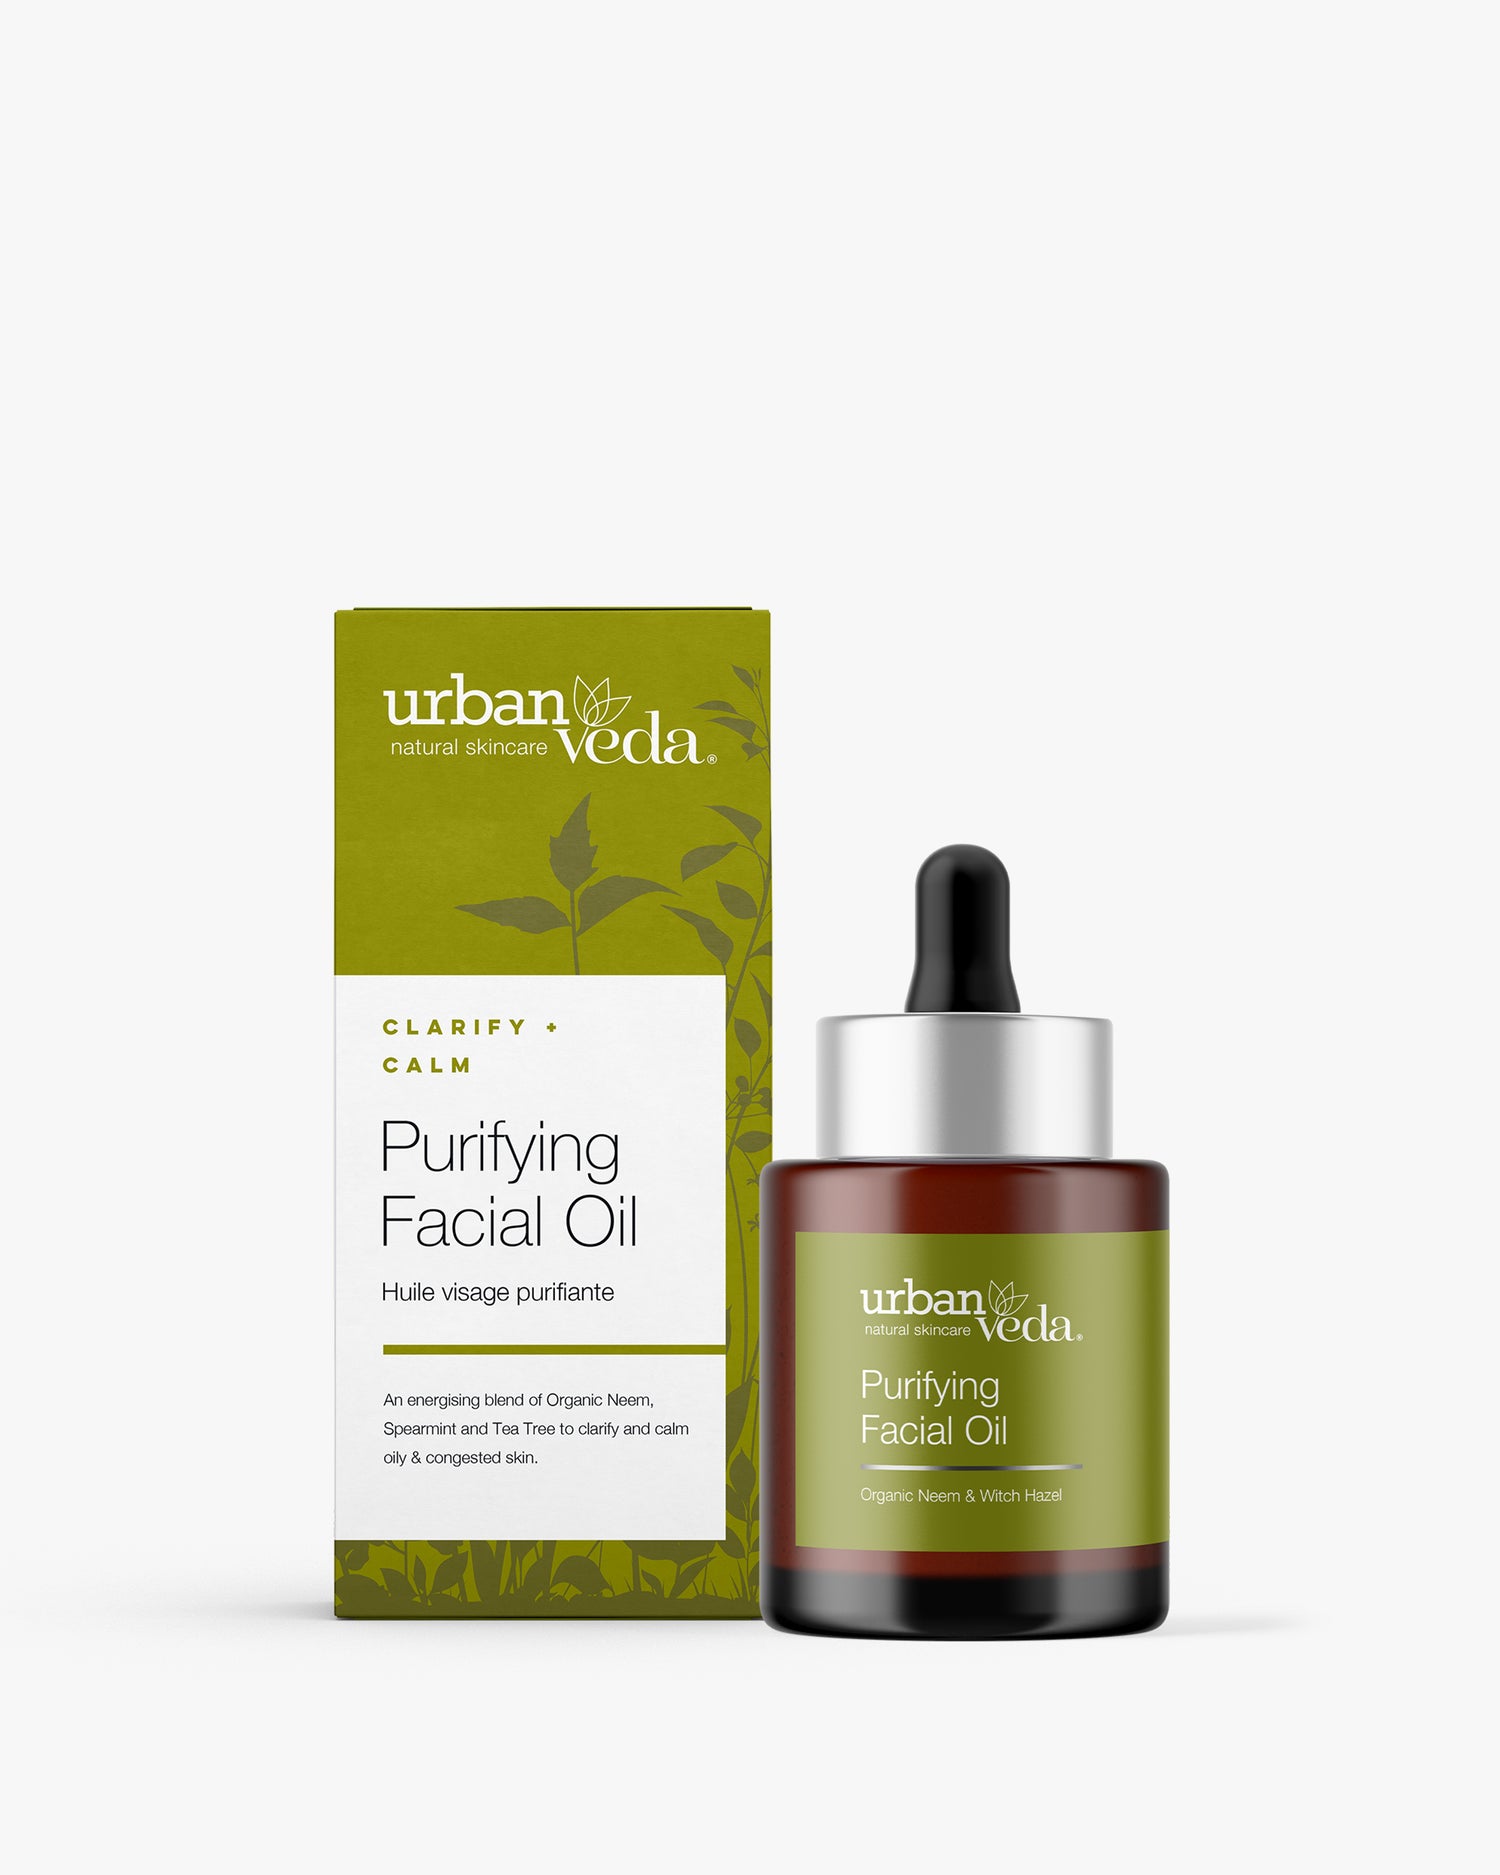 urban veda facial oil